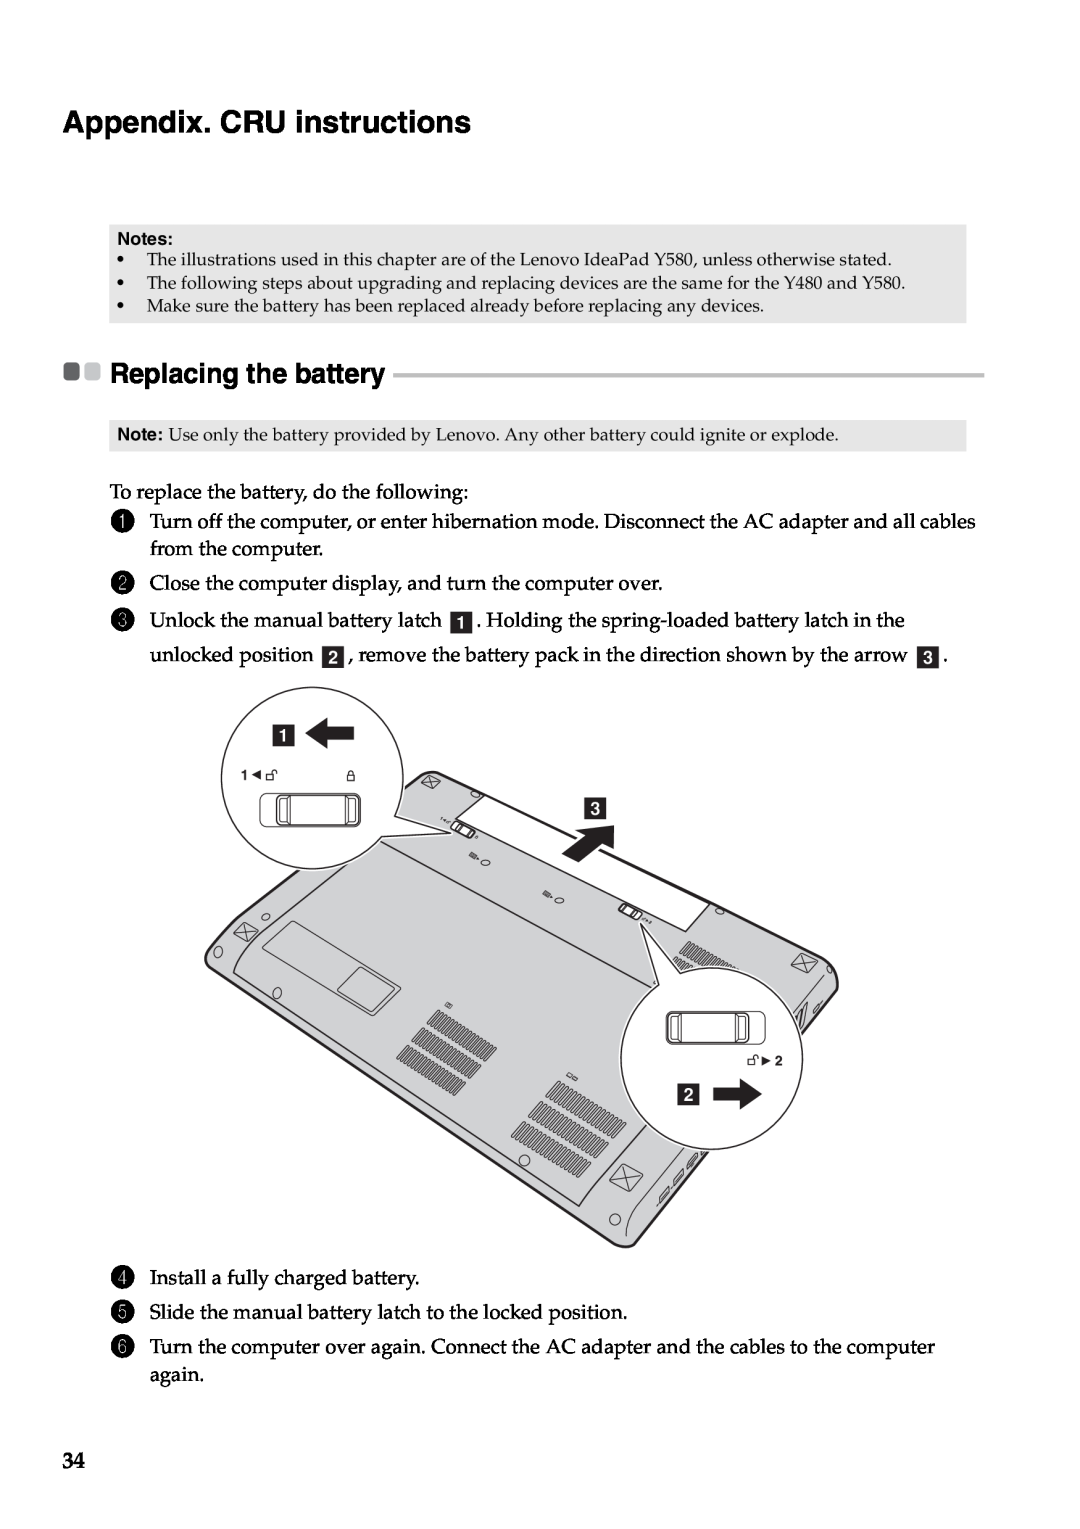 Lenovo Y580, Y480 manual Appendix. CRU instructions, Replacing the battery, a c b 